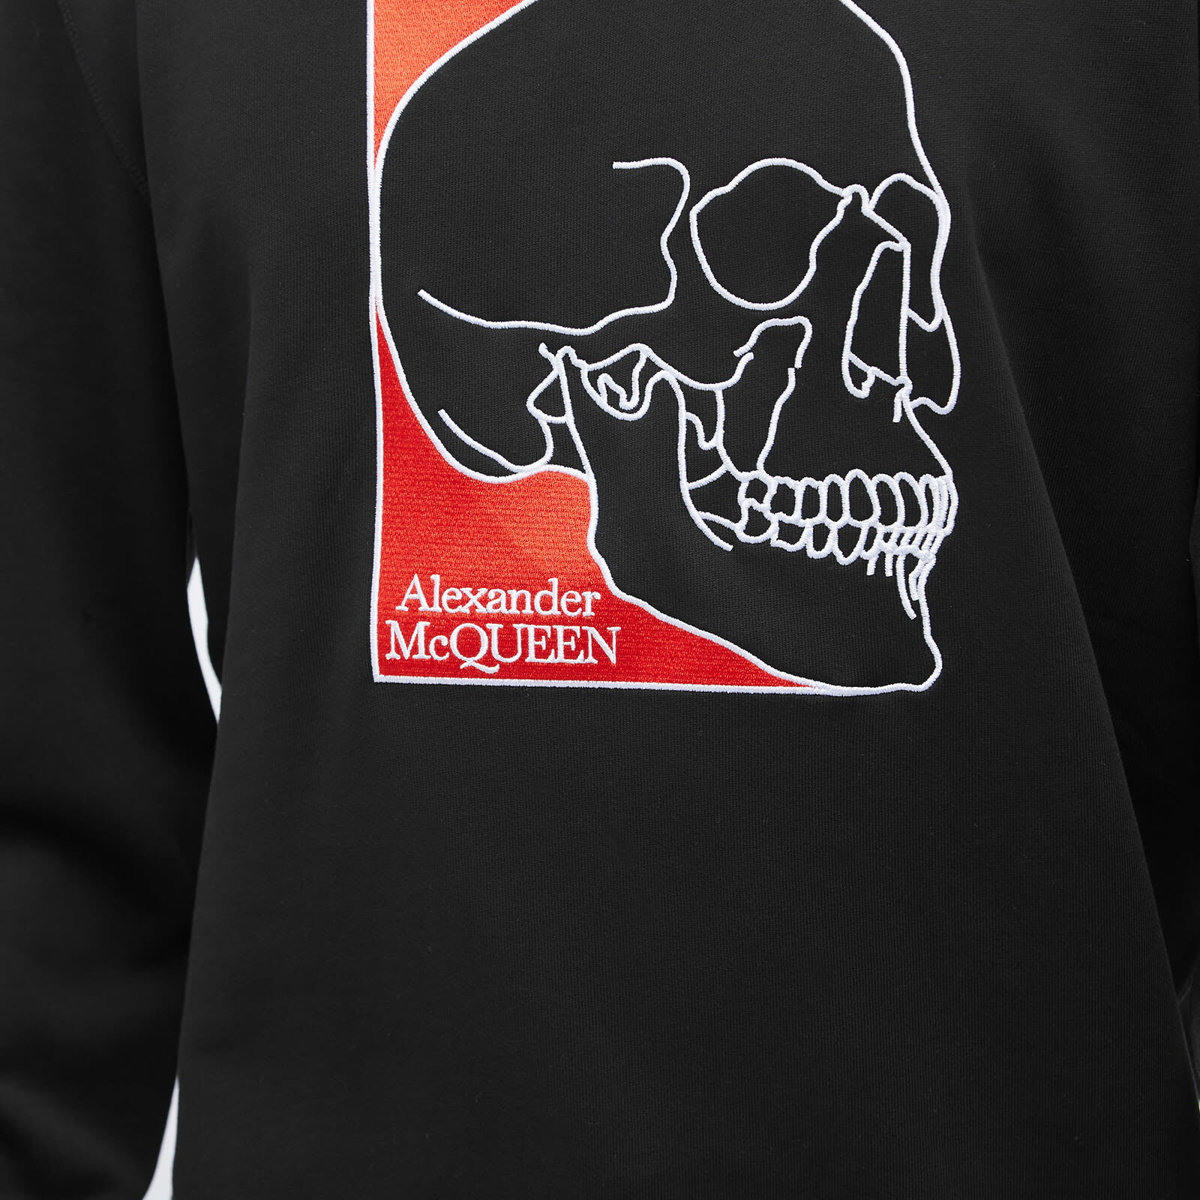 Alexander McQueen Graffiti Skull Sweater Black Red Men's L